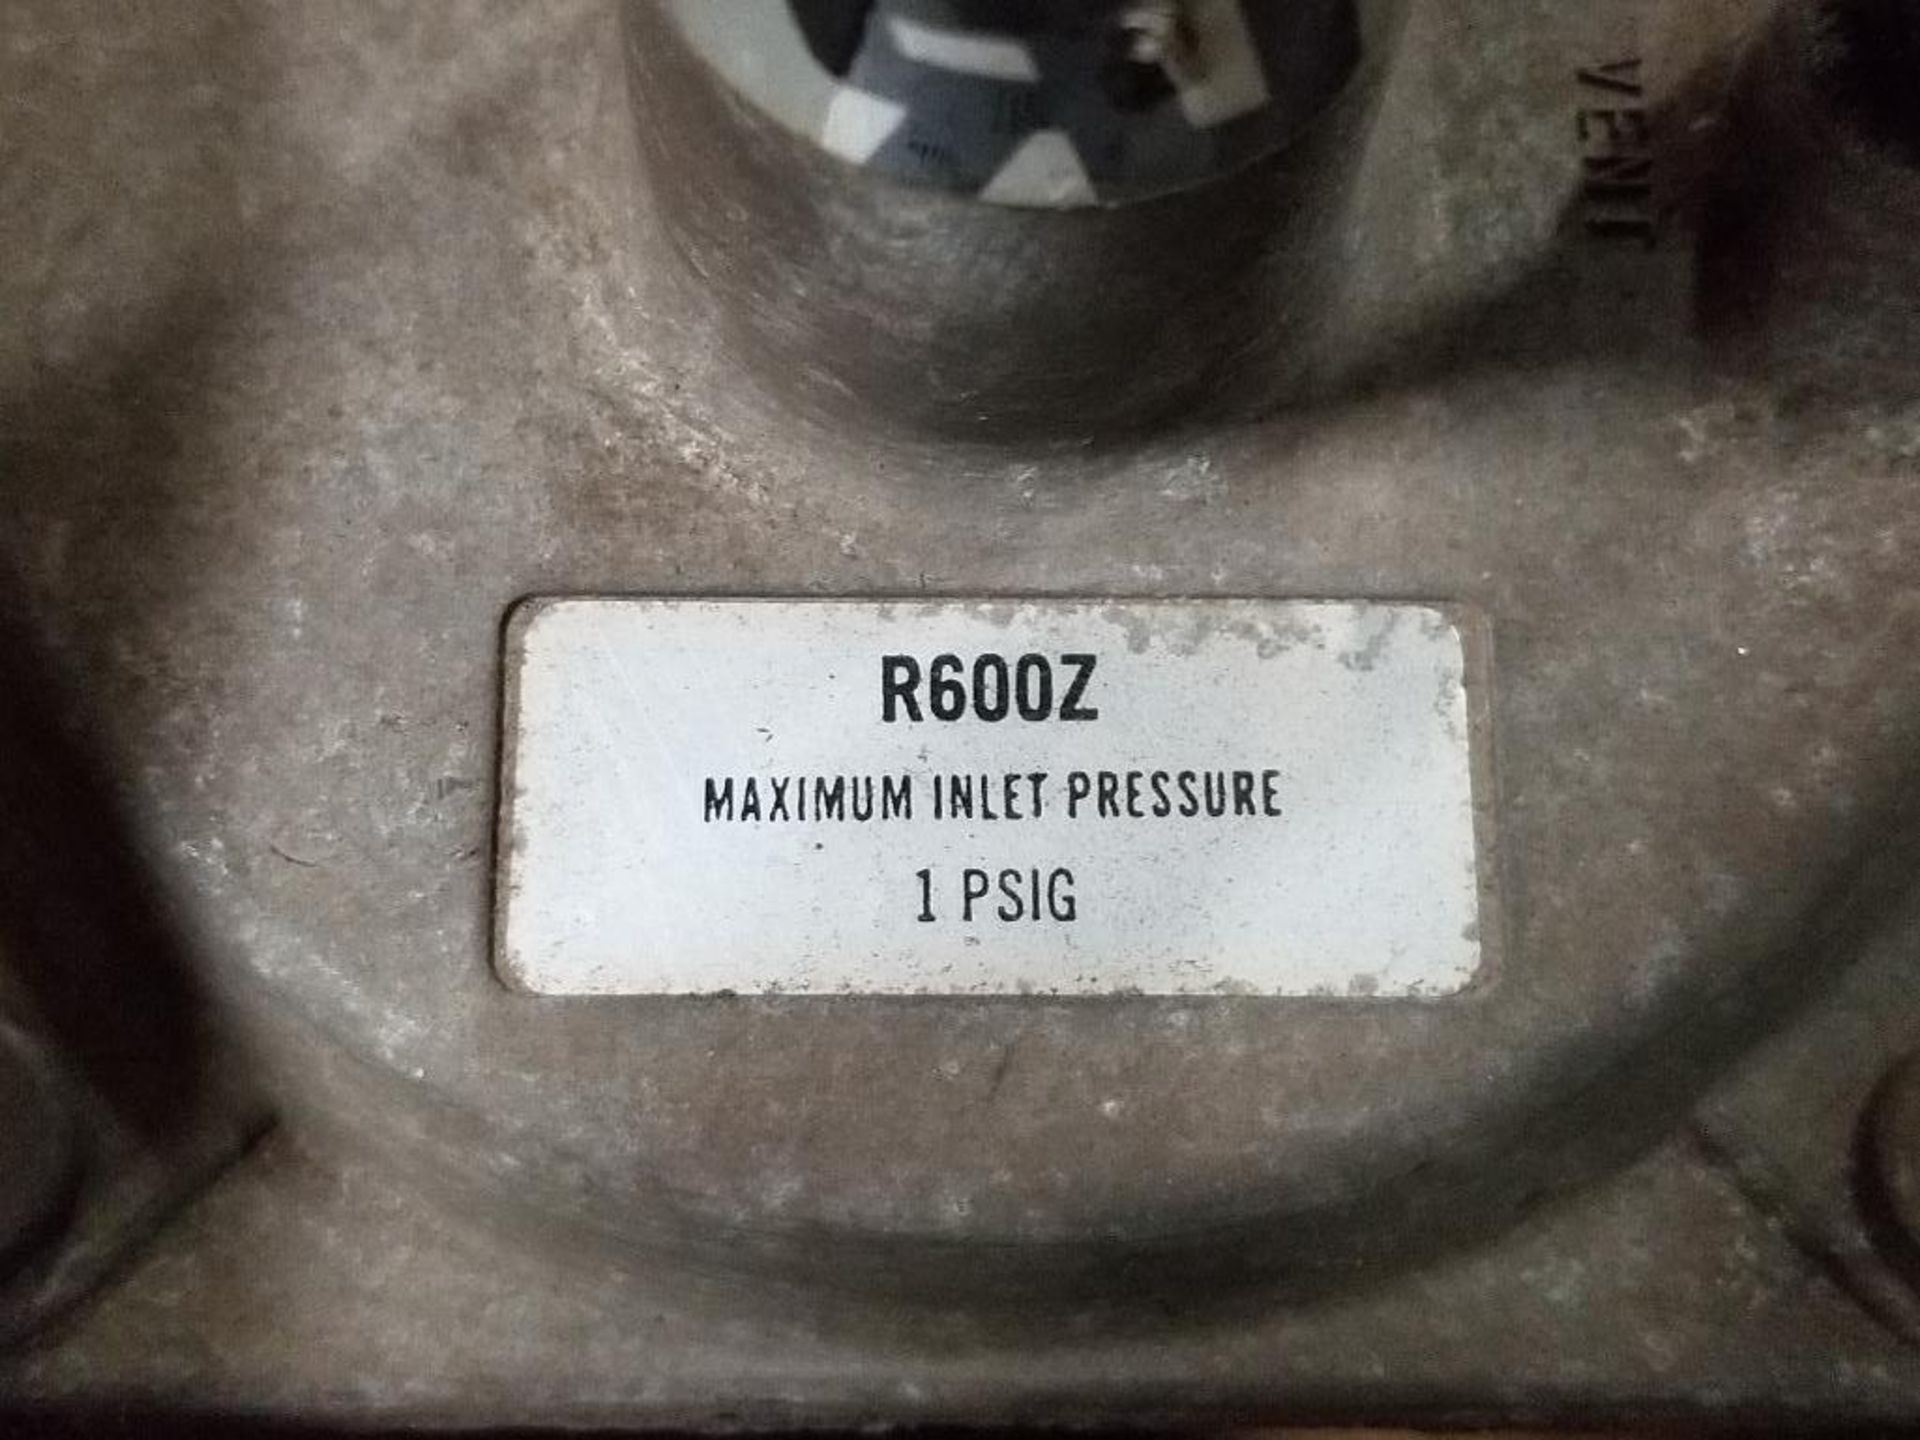 Qty 6 - Maxtrol R600Z gas pressure regulator. - Image 3 of 3